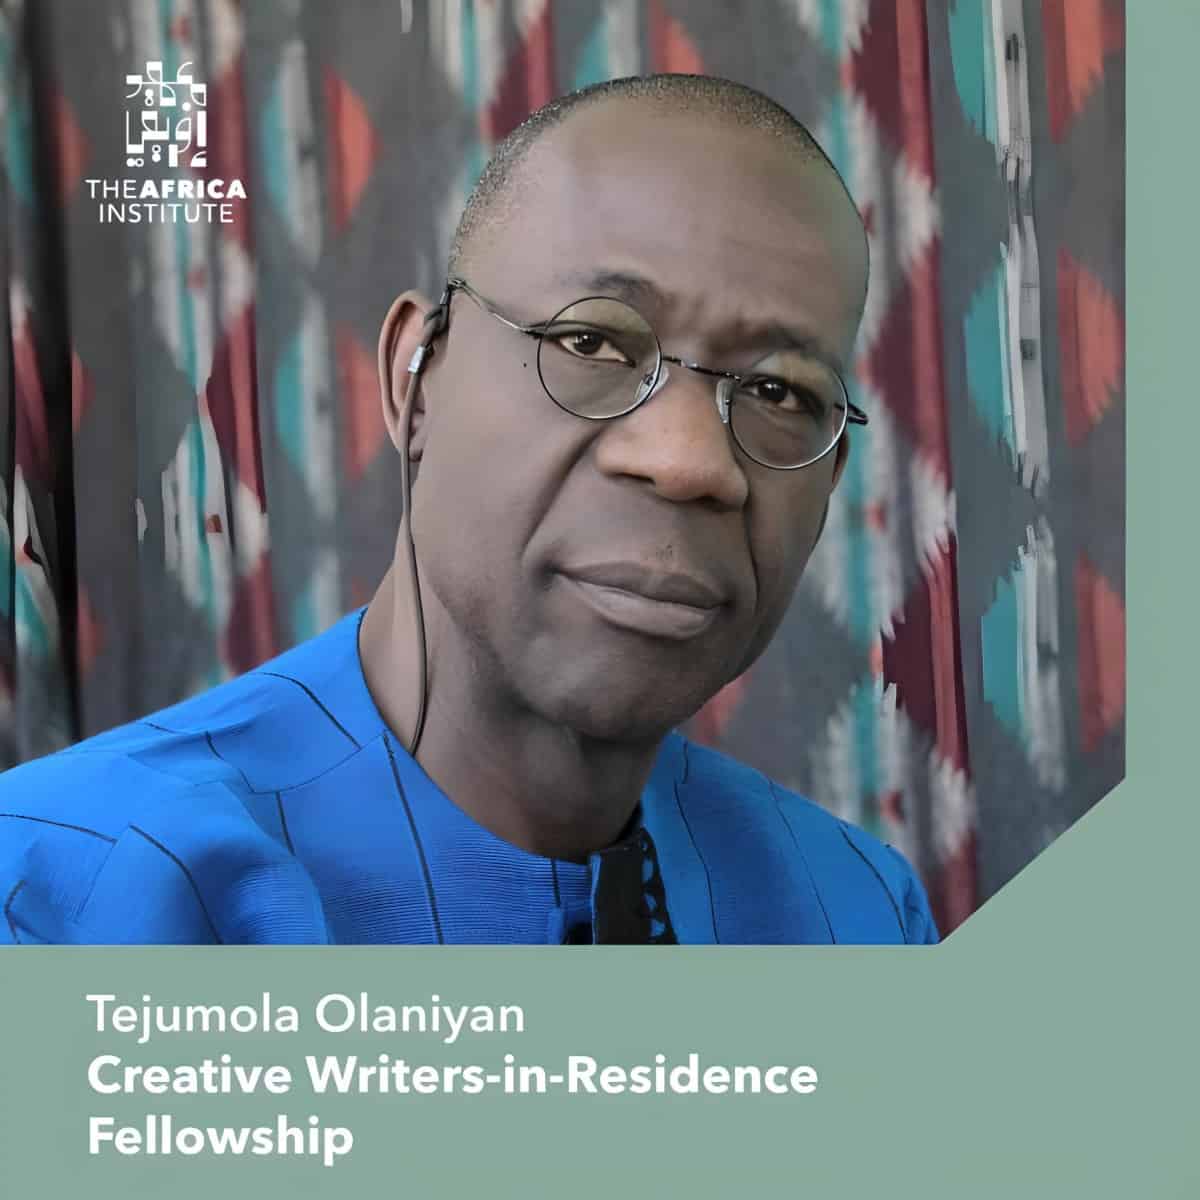 Tejumola Olaniyan Creative Writers-in-Residence Fellowship